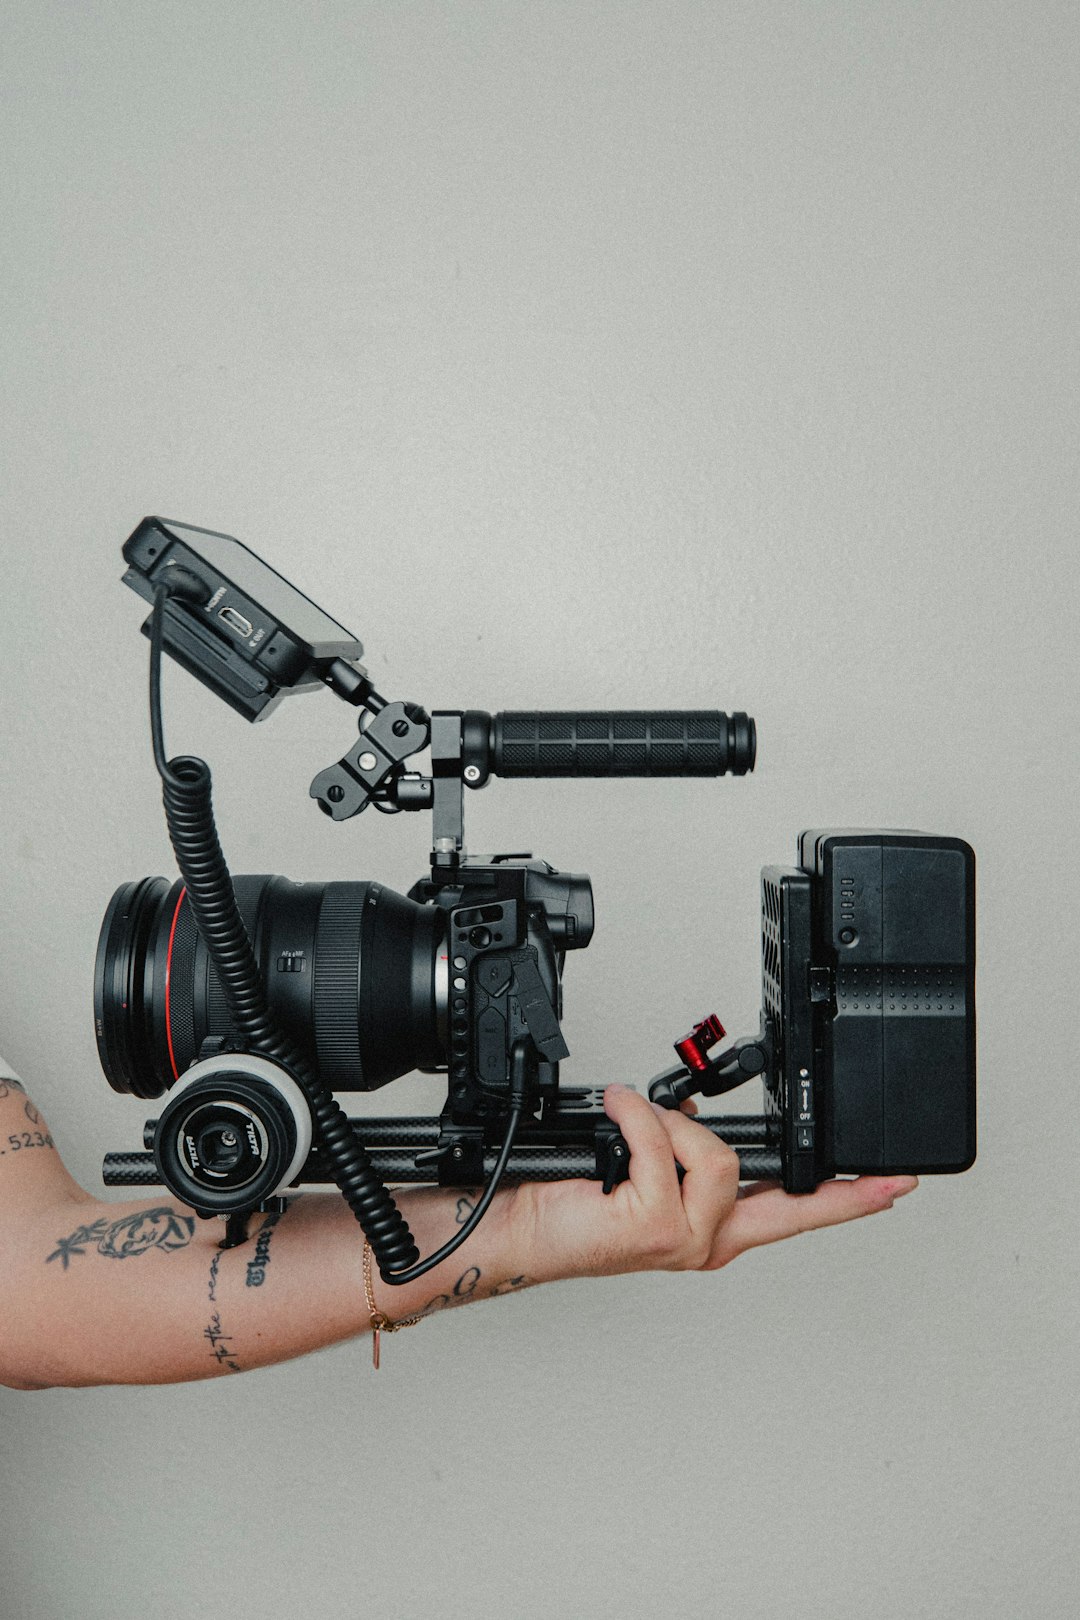 black video camera on black tripod